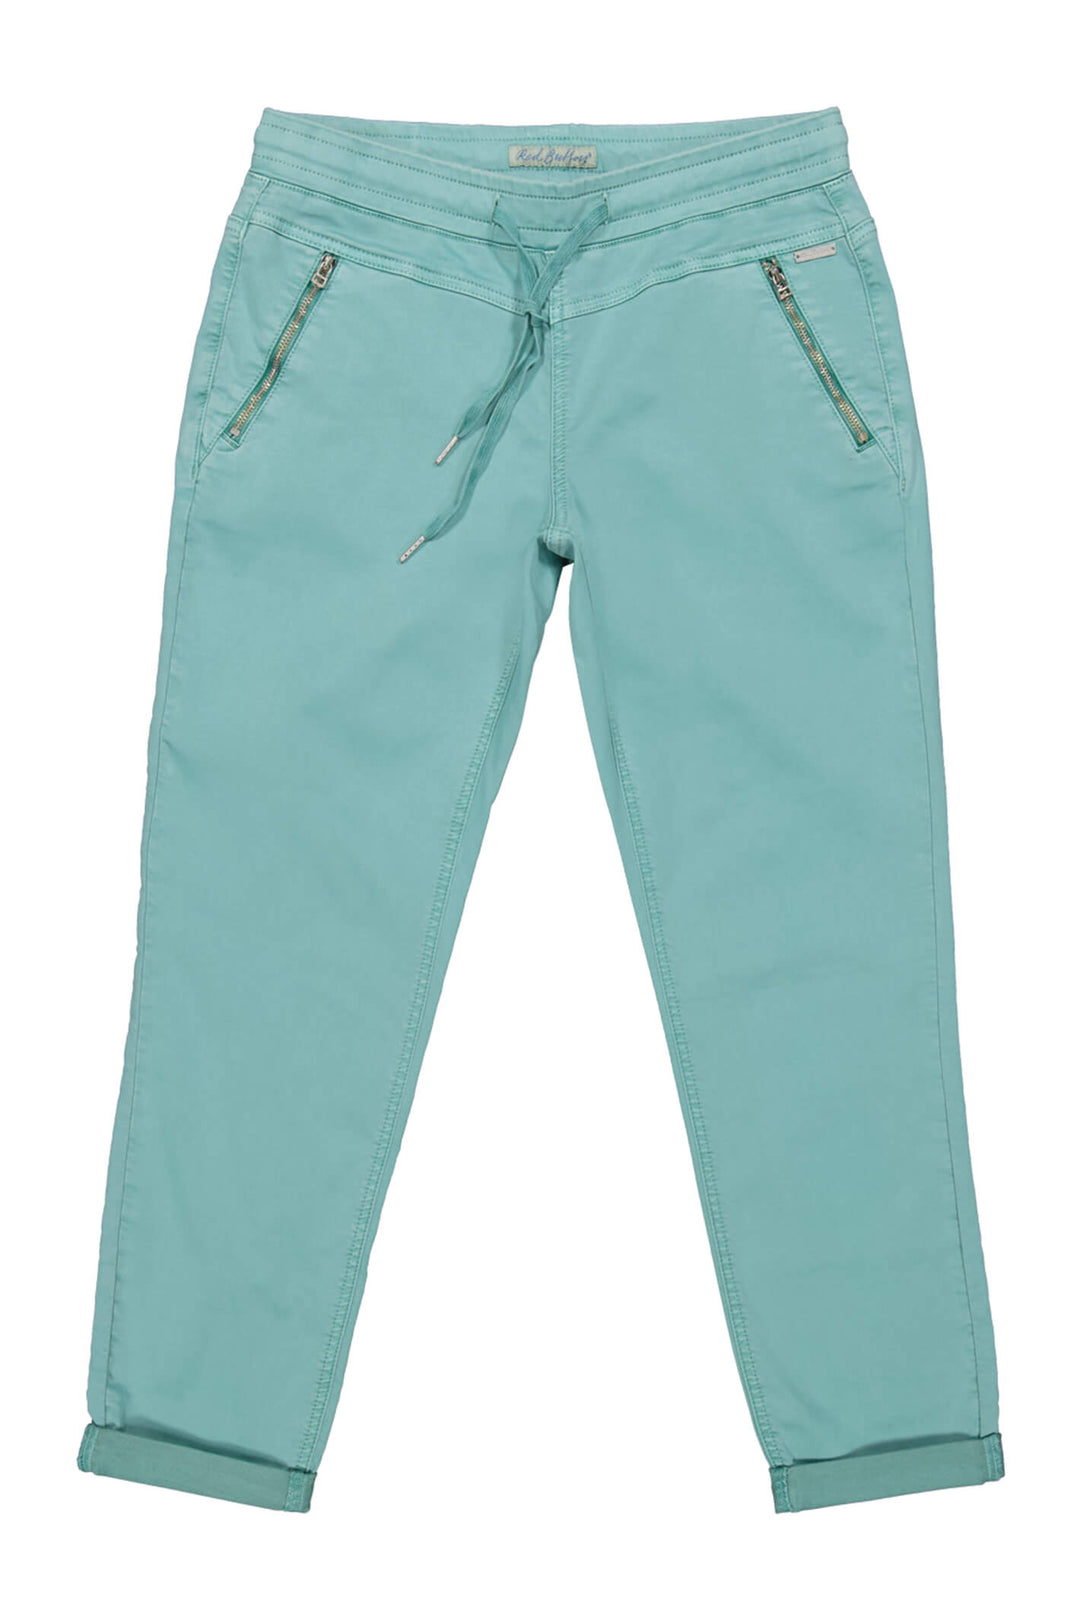 Red Button SRB3936 Aqua Green Tessy Crop Jogger Trousers - Olivia Grace Fashion